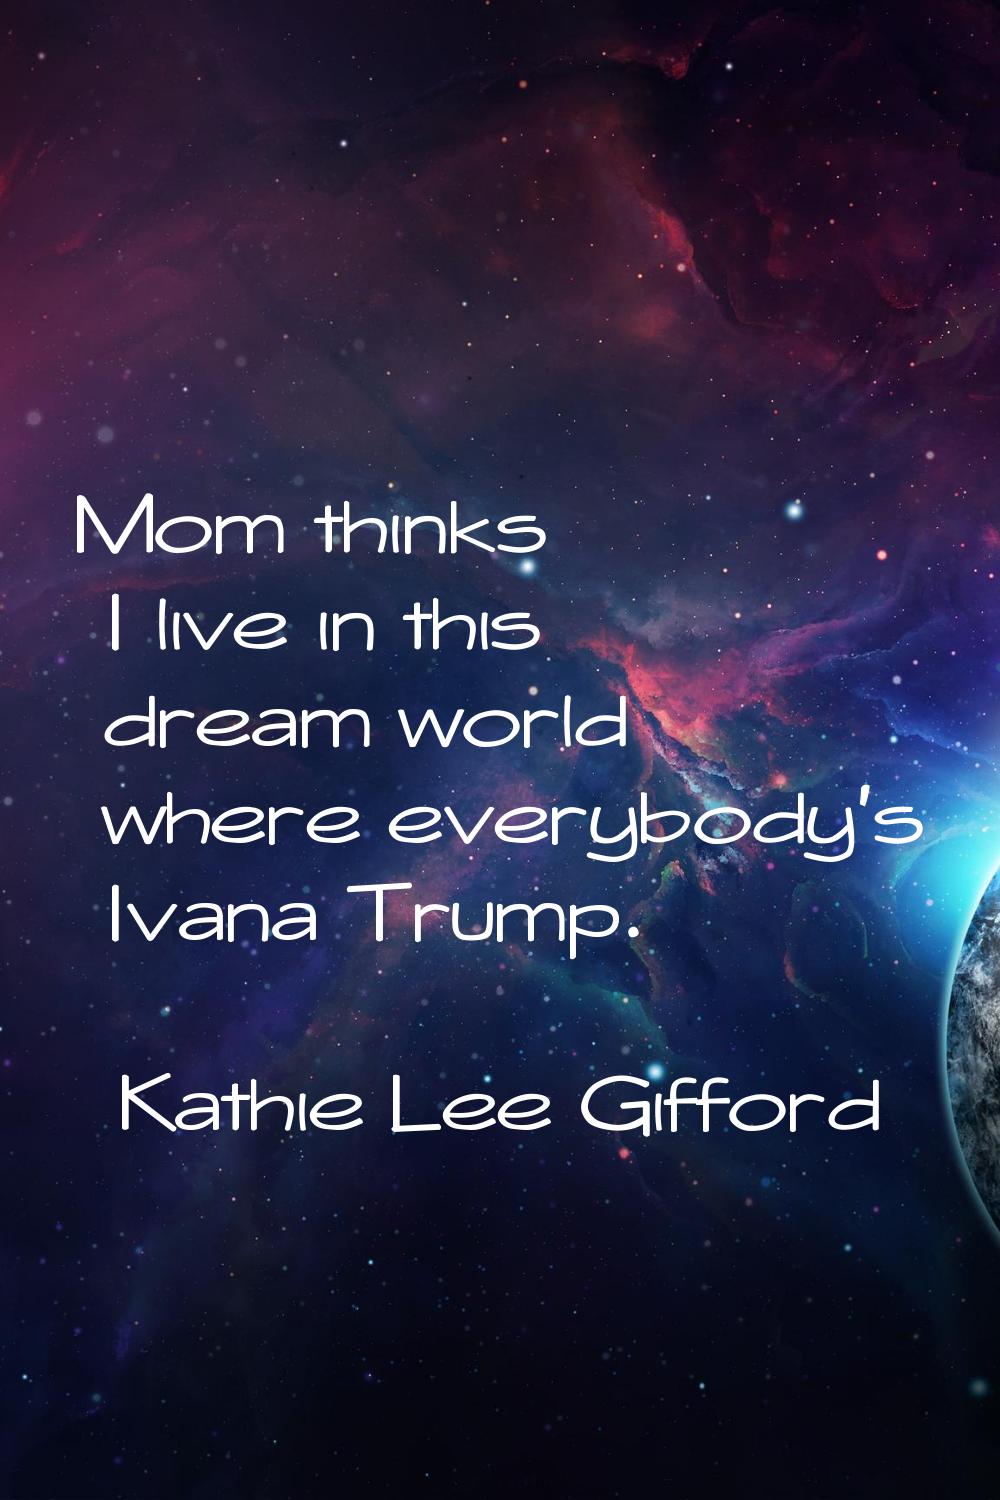 Mom thinks I live in this dream world where everybody's Ivana Trump.